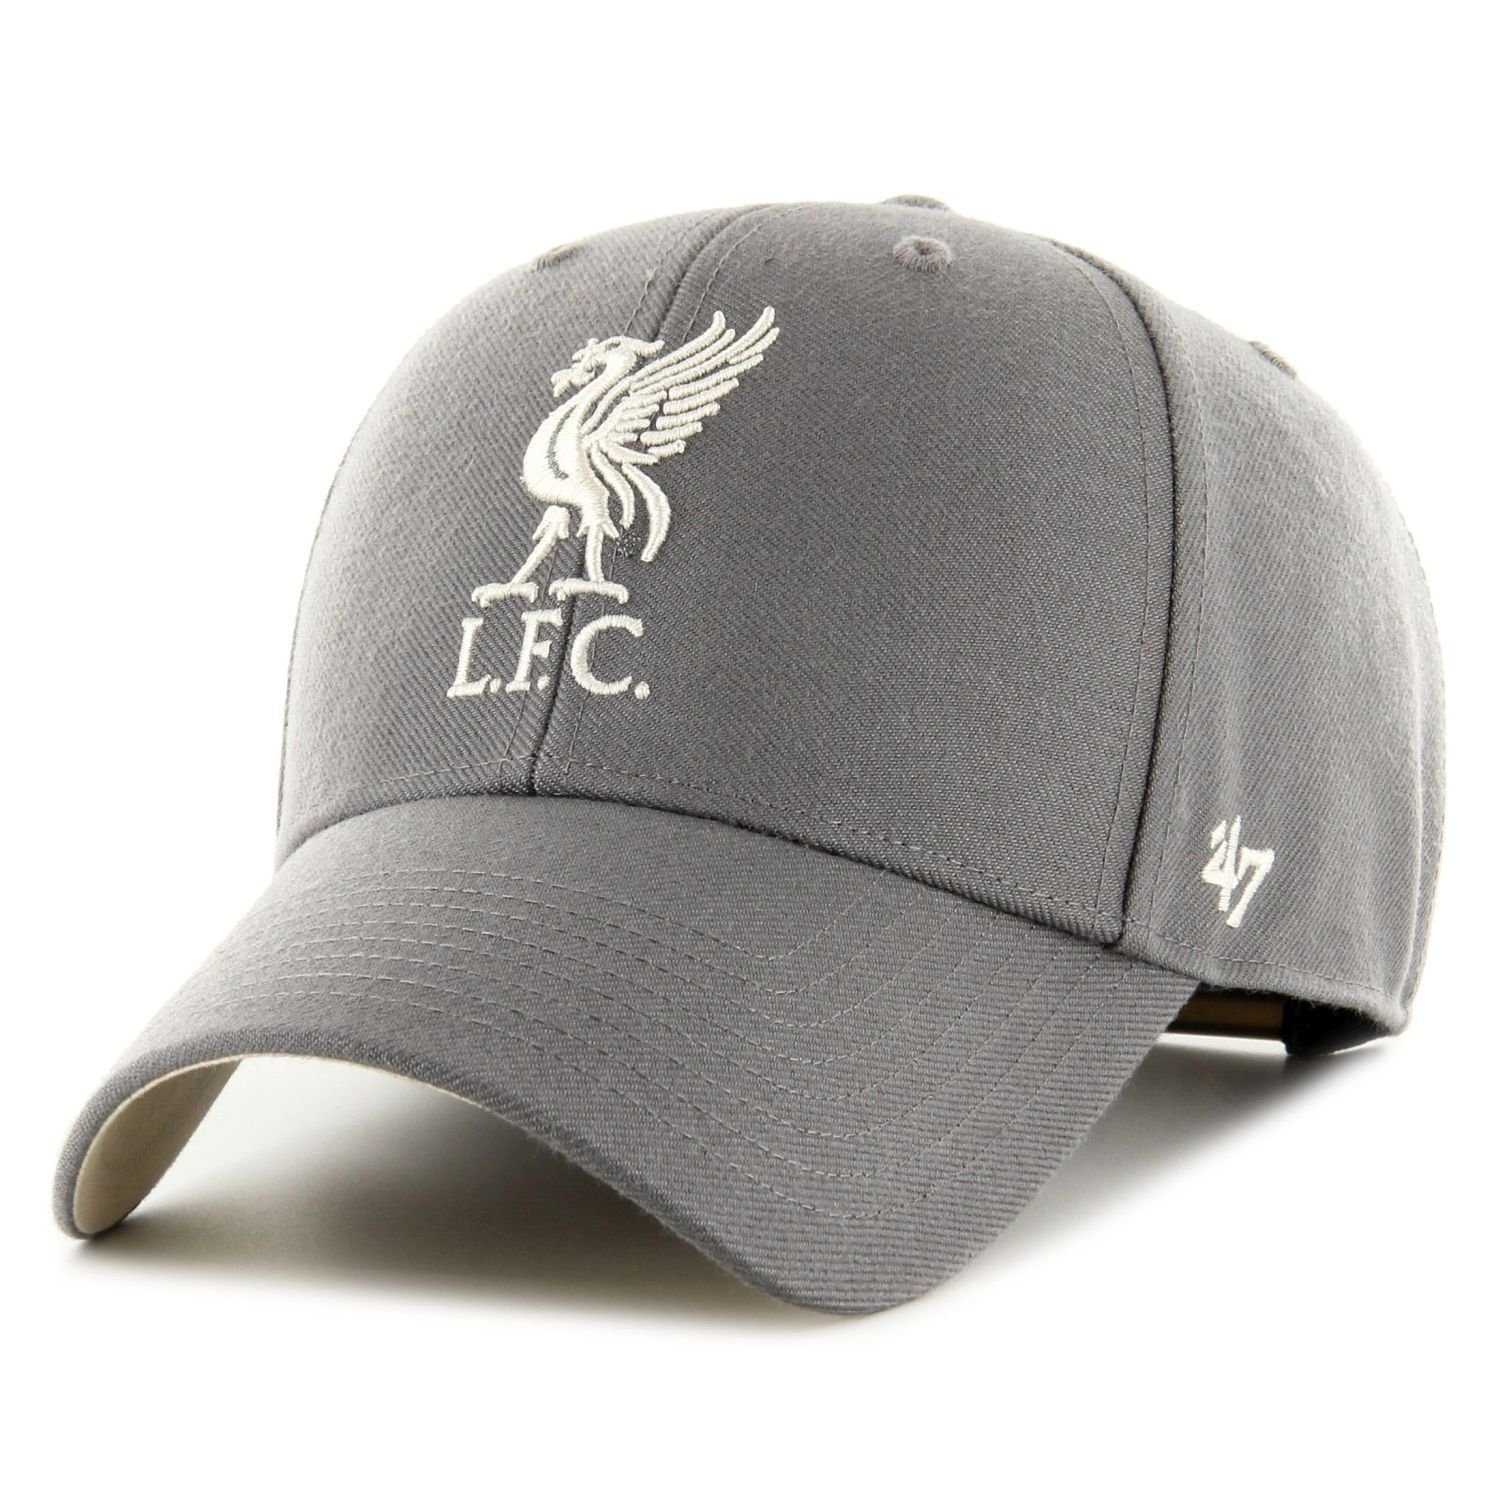 Baseball '47 Liverpool FC Brand Cap BALLPARK